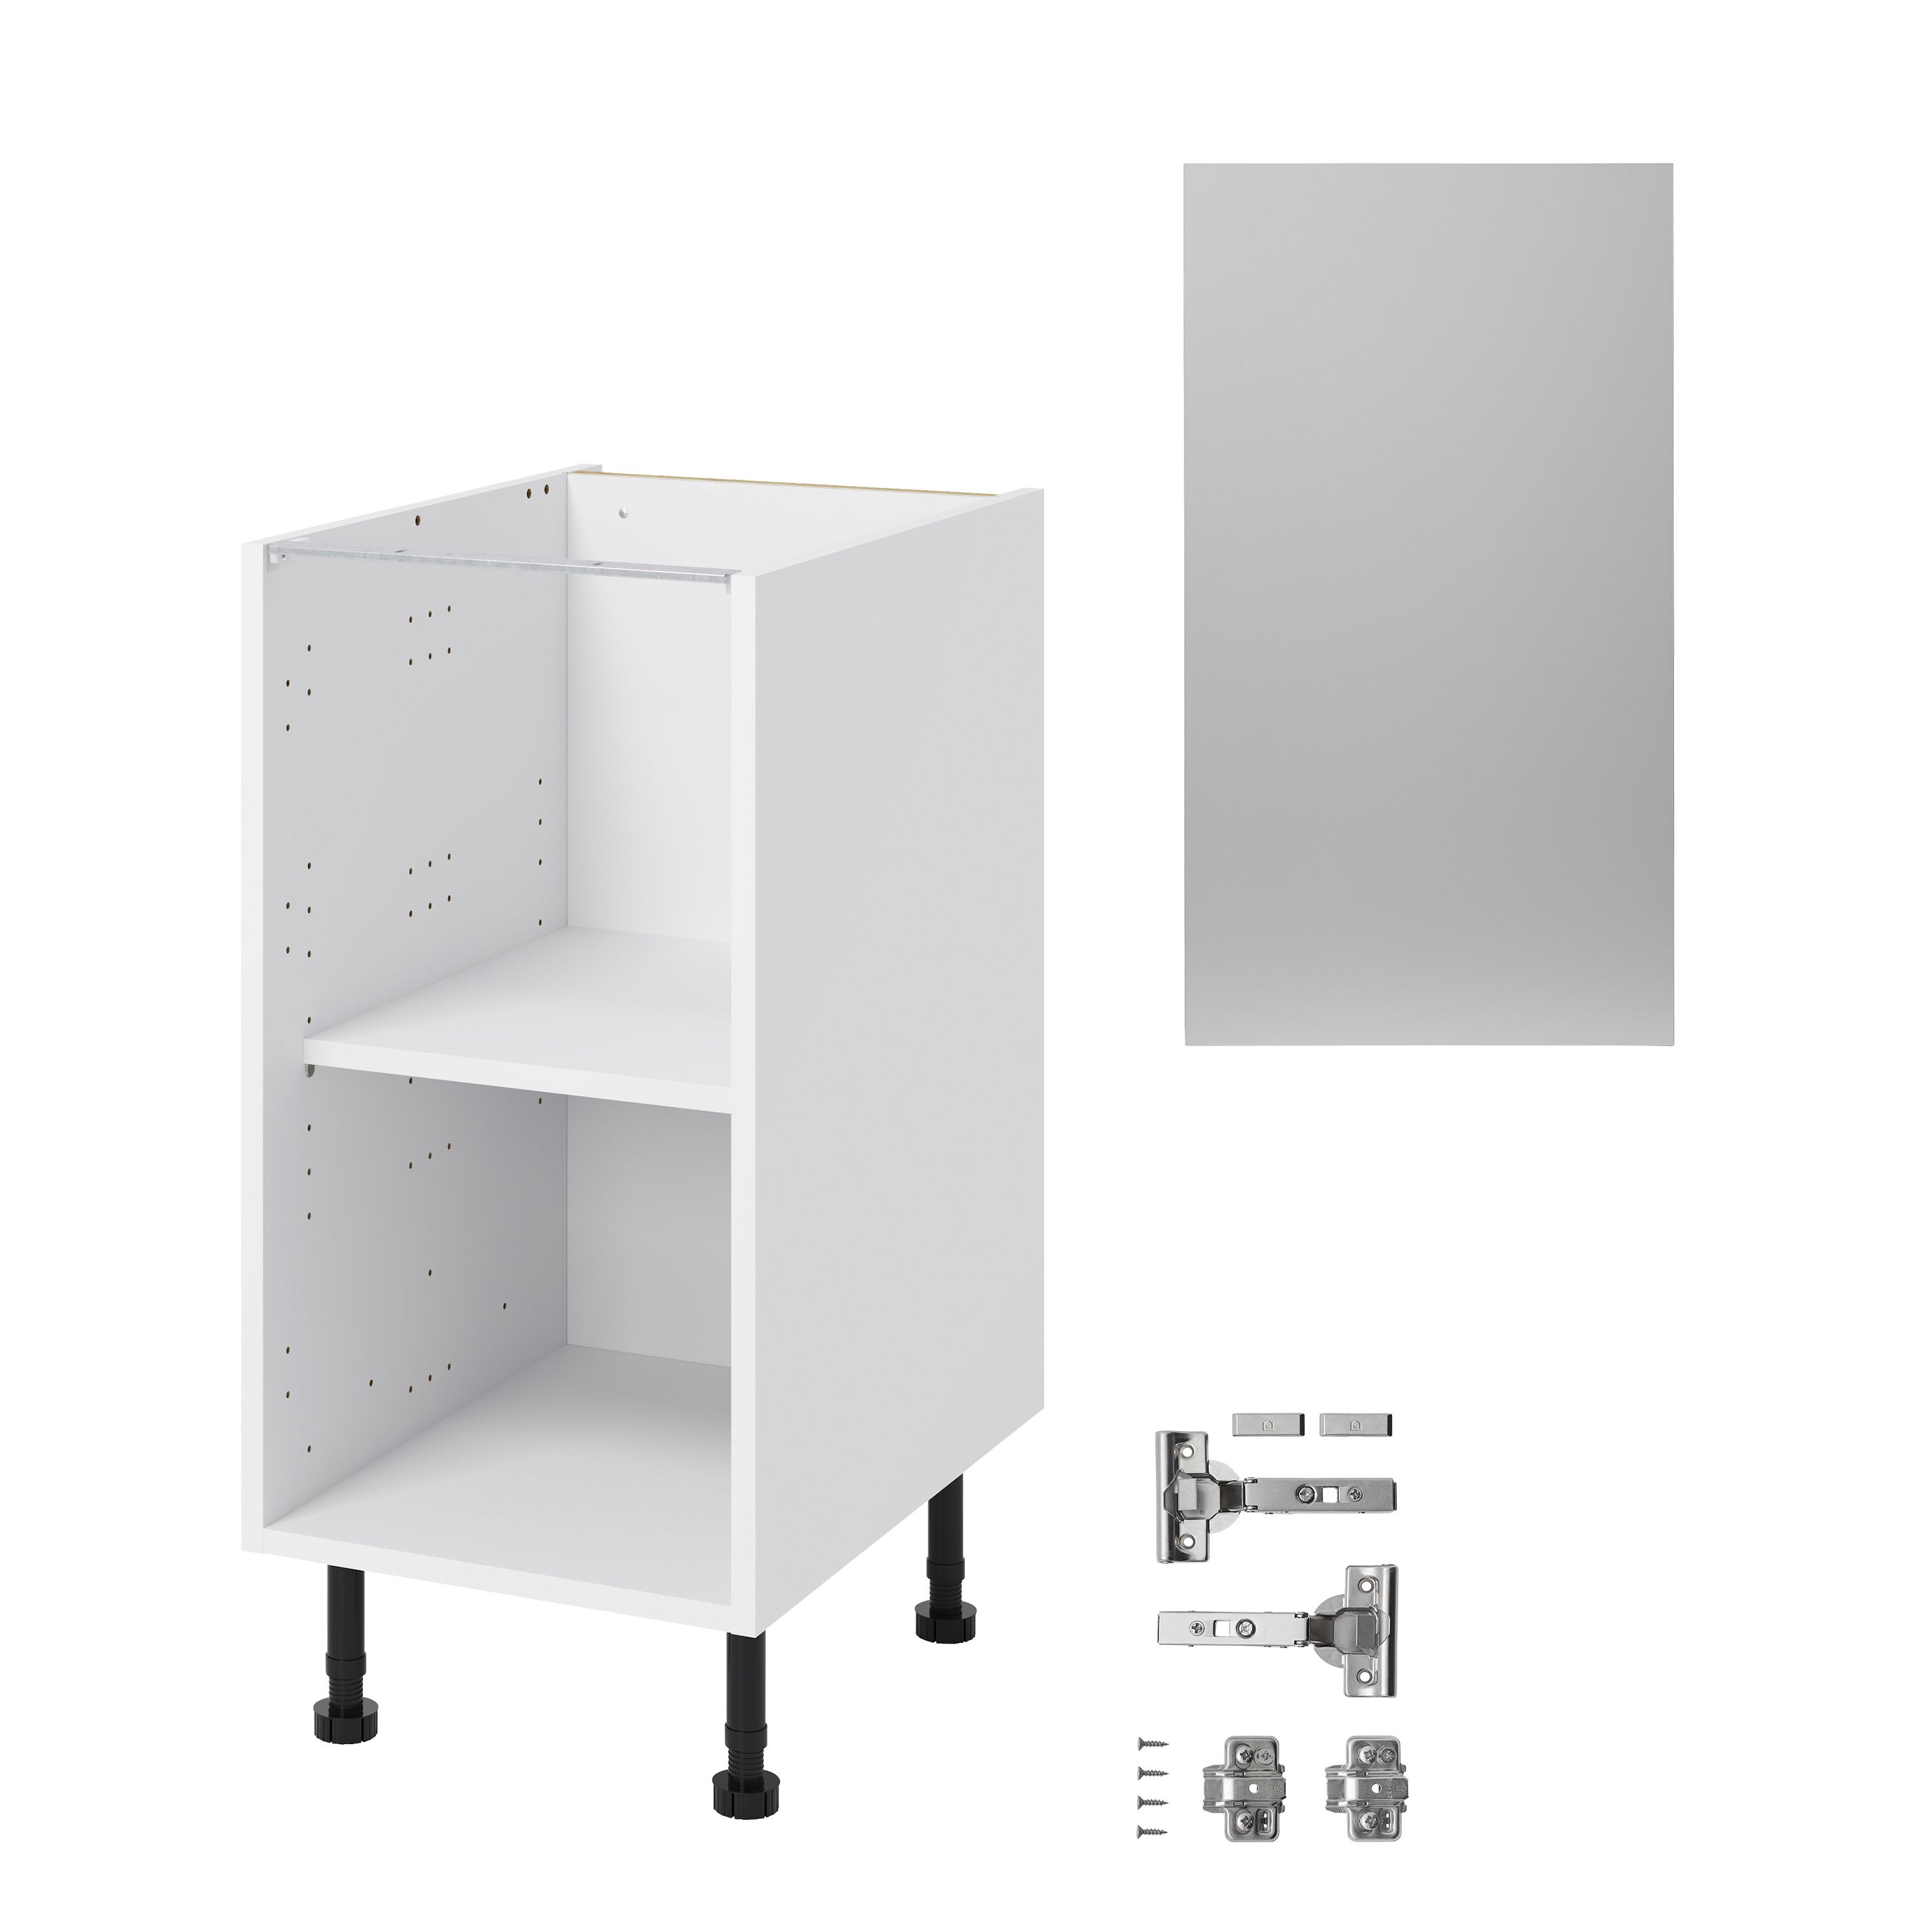 GoodHome Balsamita Matt grey slab Base Kitchen cabinet (W)400mm (H)720mm